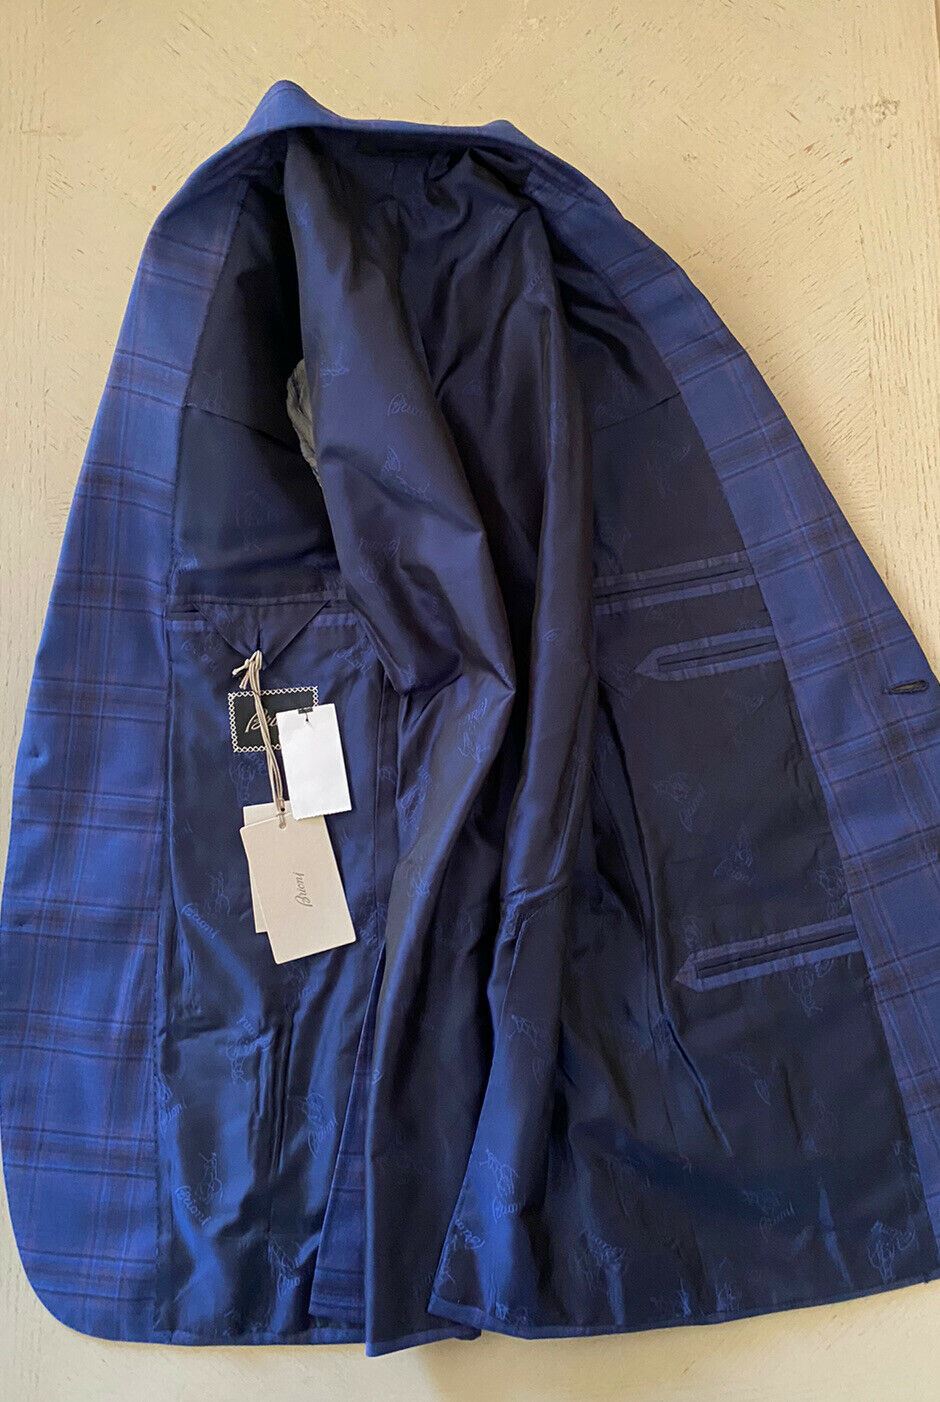 NWT $4900 Brioni Men’s Wool Sport Coat Blazer Jacket Blue 38R US/48R Eu Italy